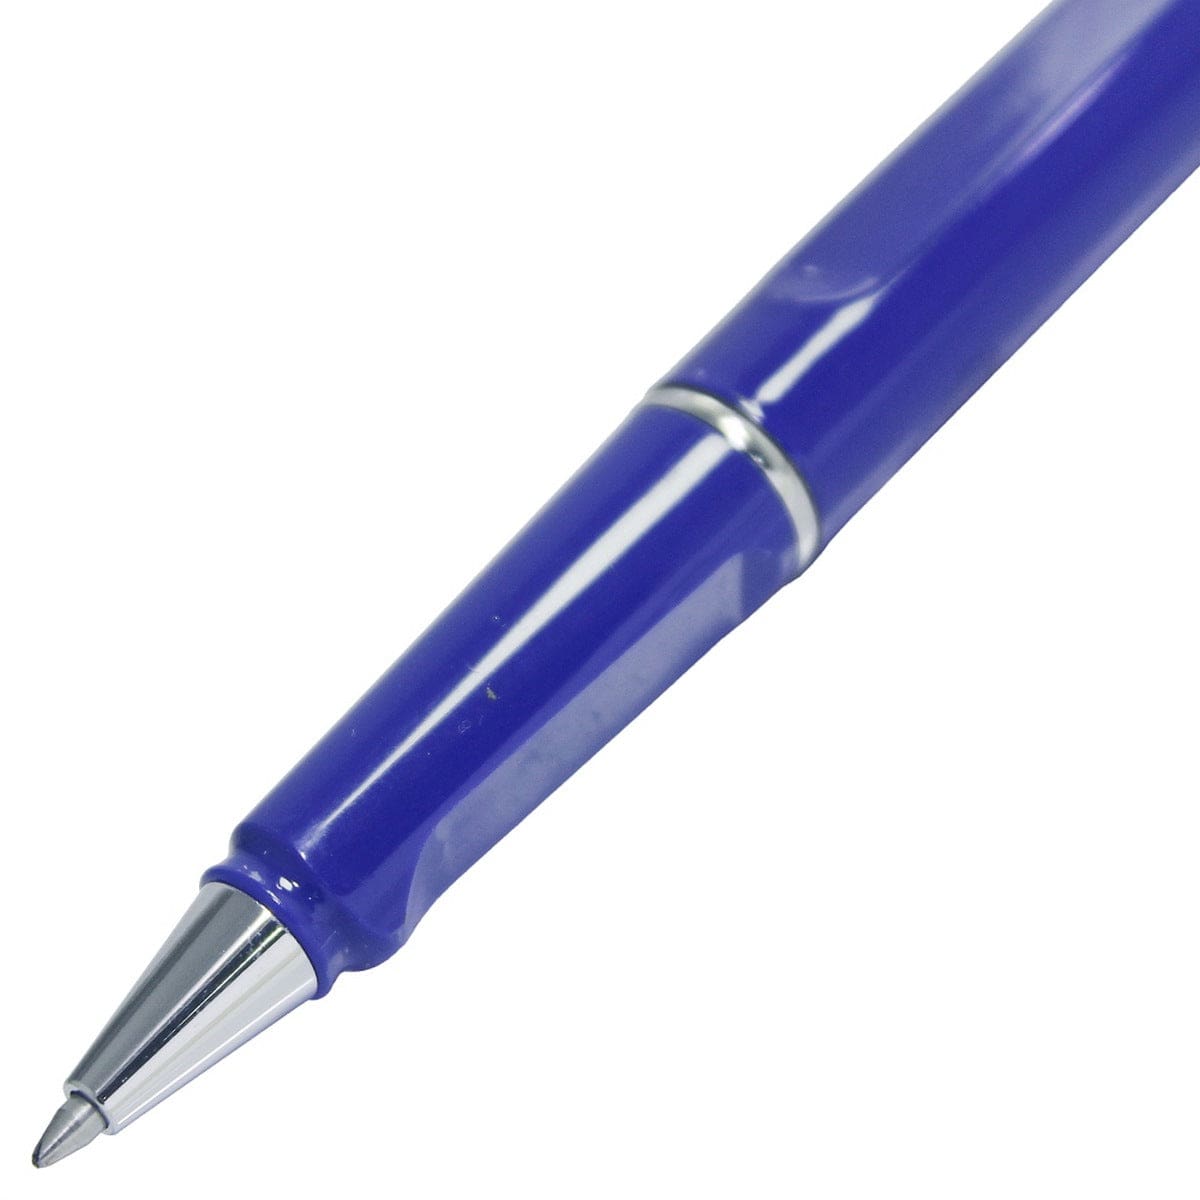 jags-mumbai Roller Pens Make a Bold Statement with the Roller Pen Blue 599-1RPBL